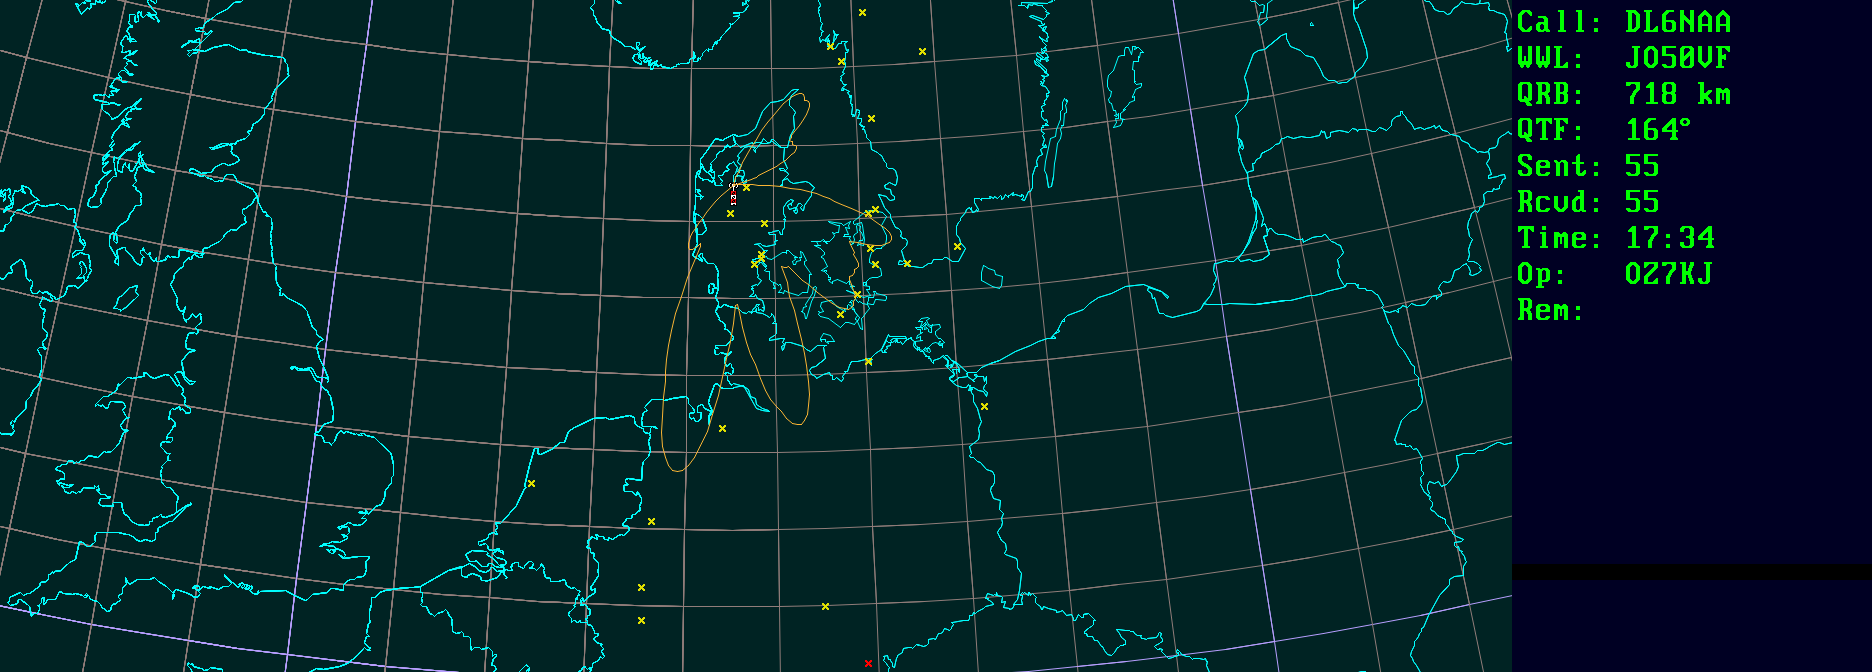 Polar map for 432 MHz